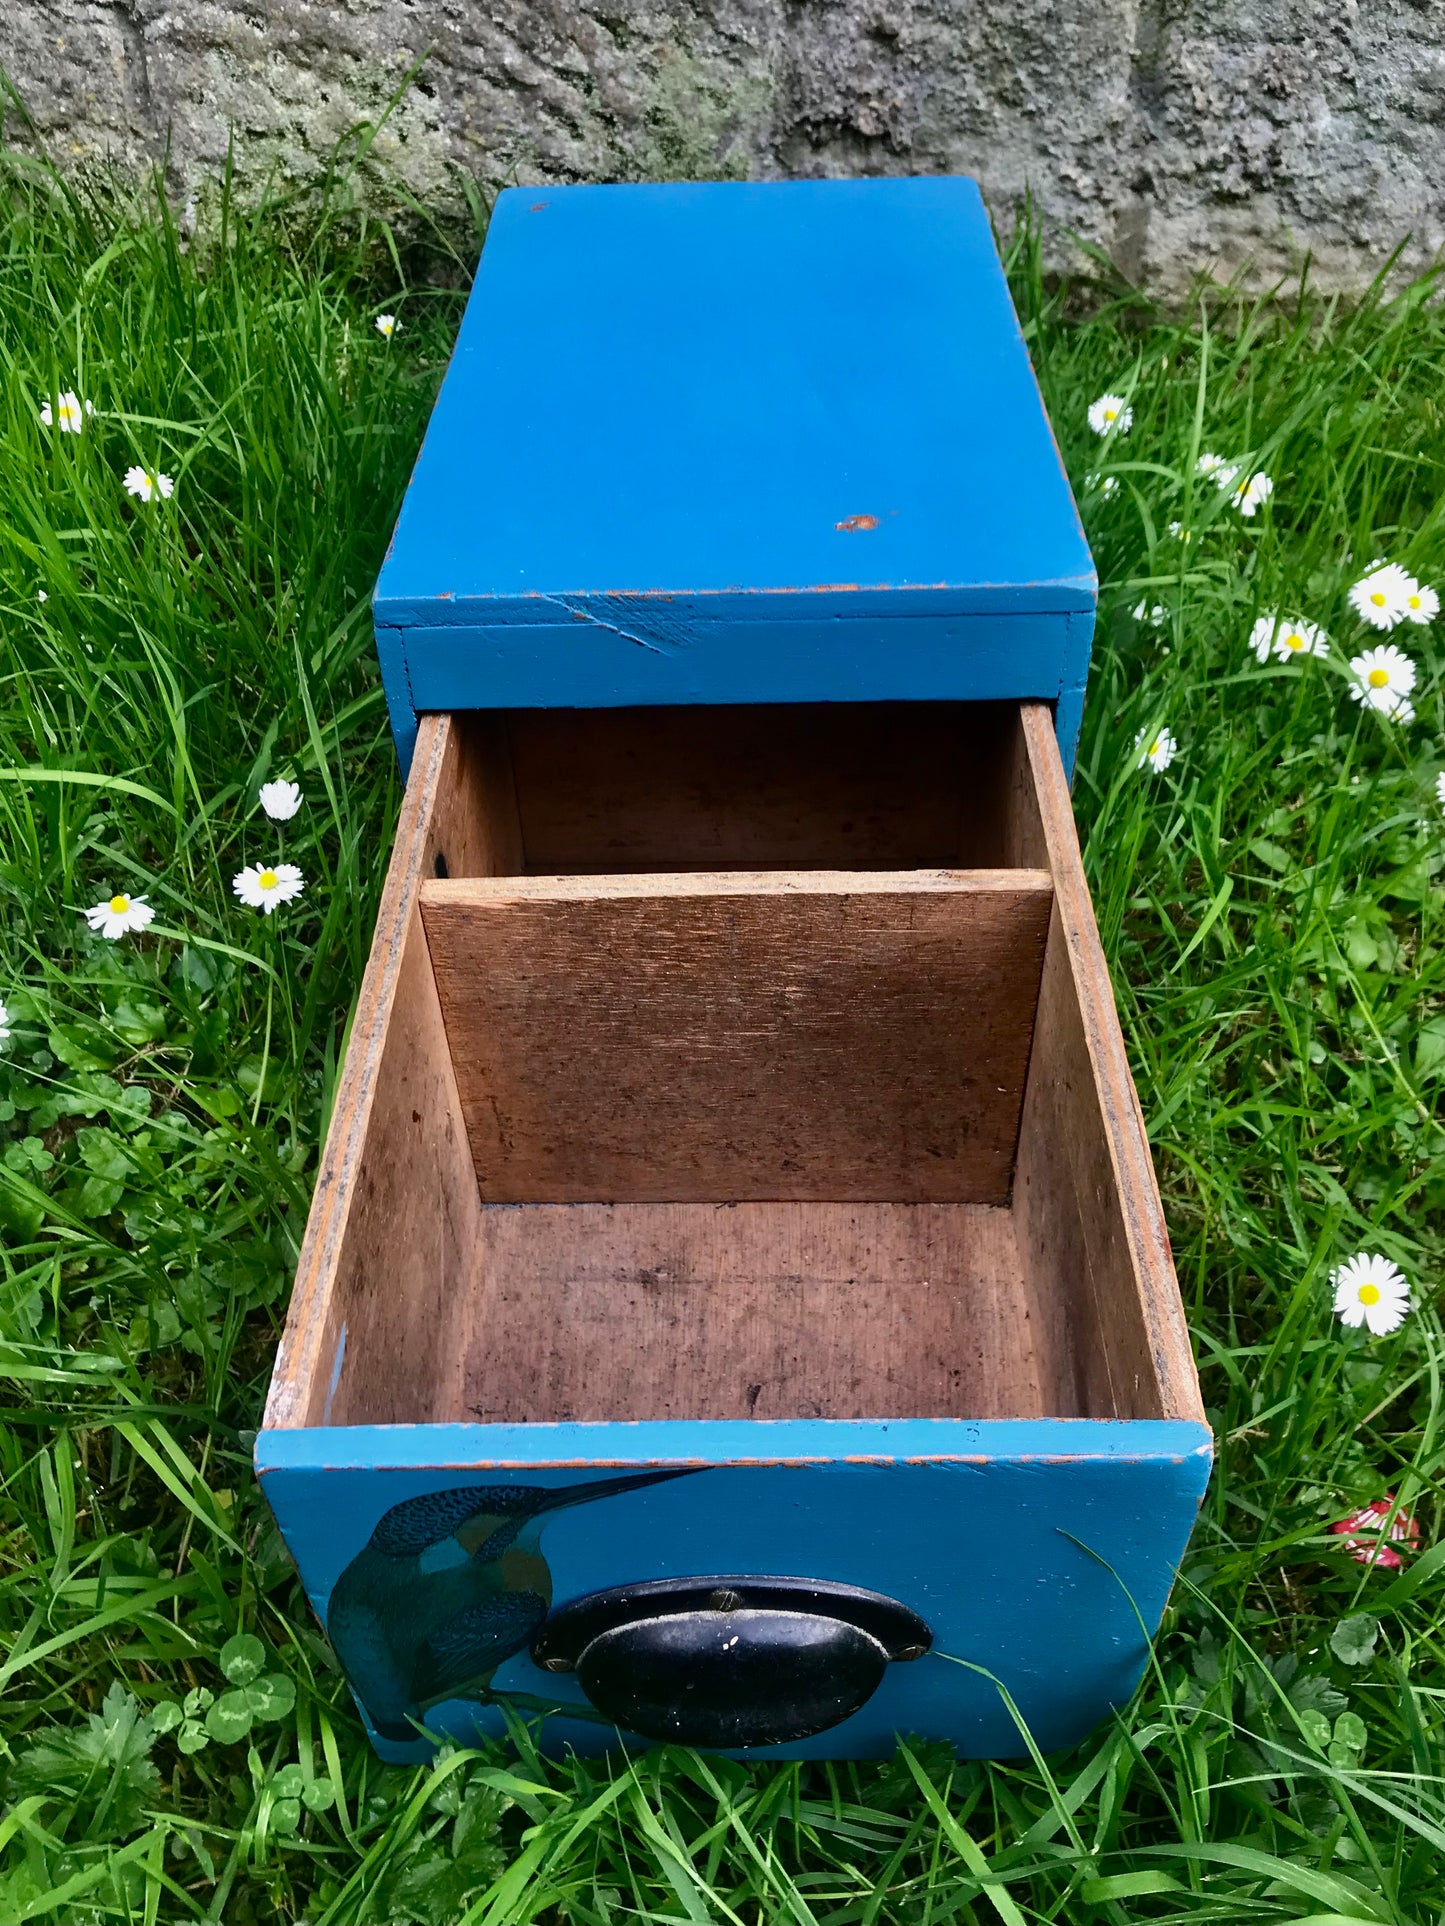 Vintage wooden storage box with kingfisher design